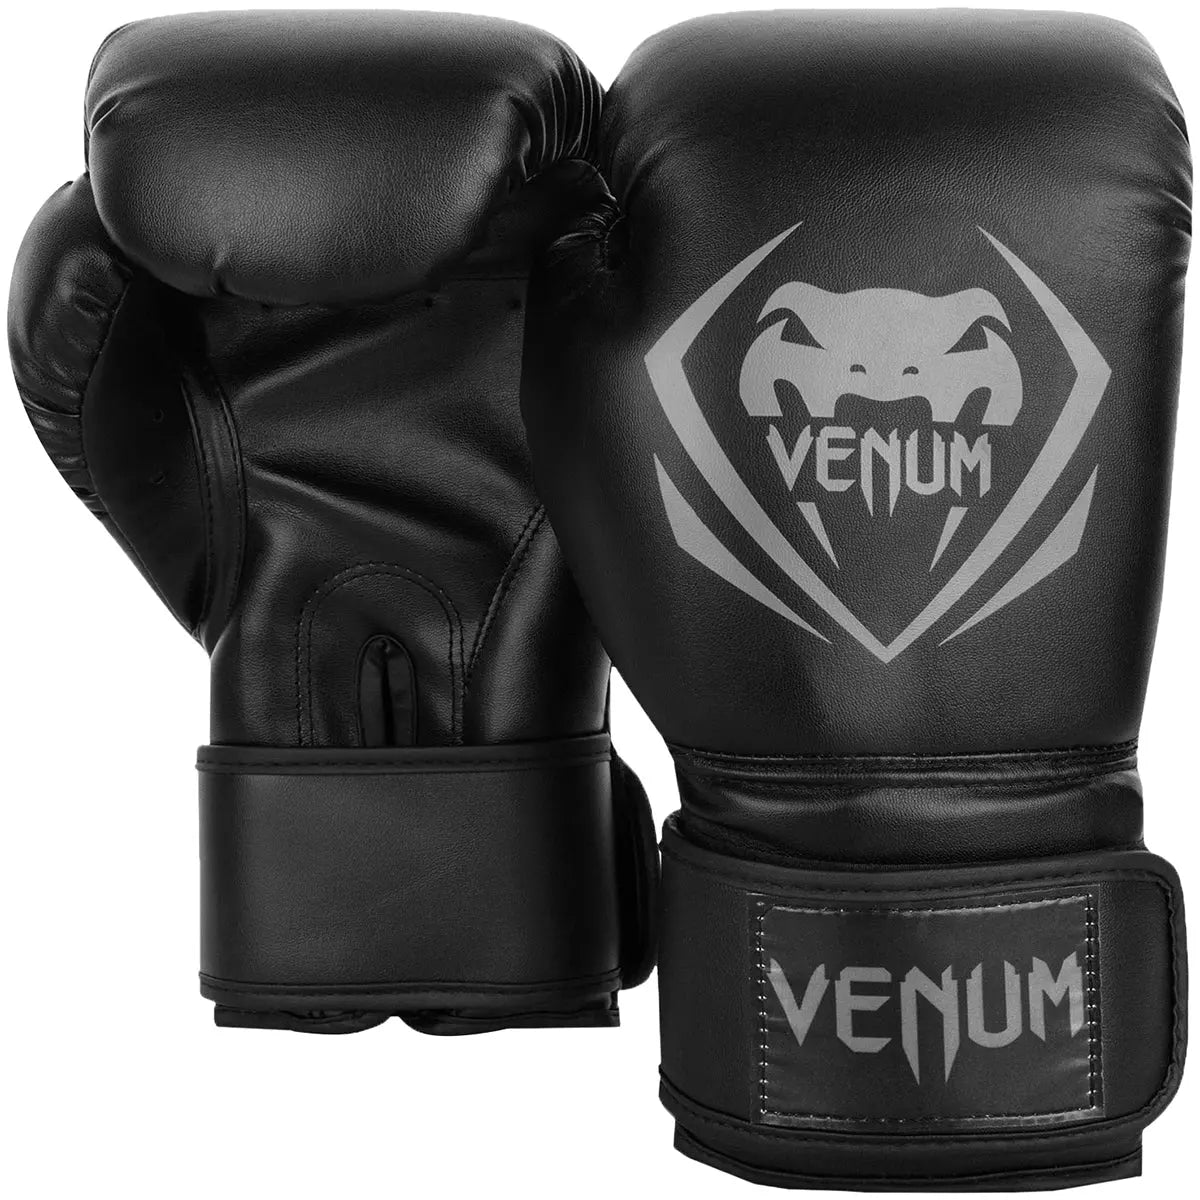 Venum Contender Hook and Loop Training Boxing Gloves - Black/Gray Venum